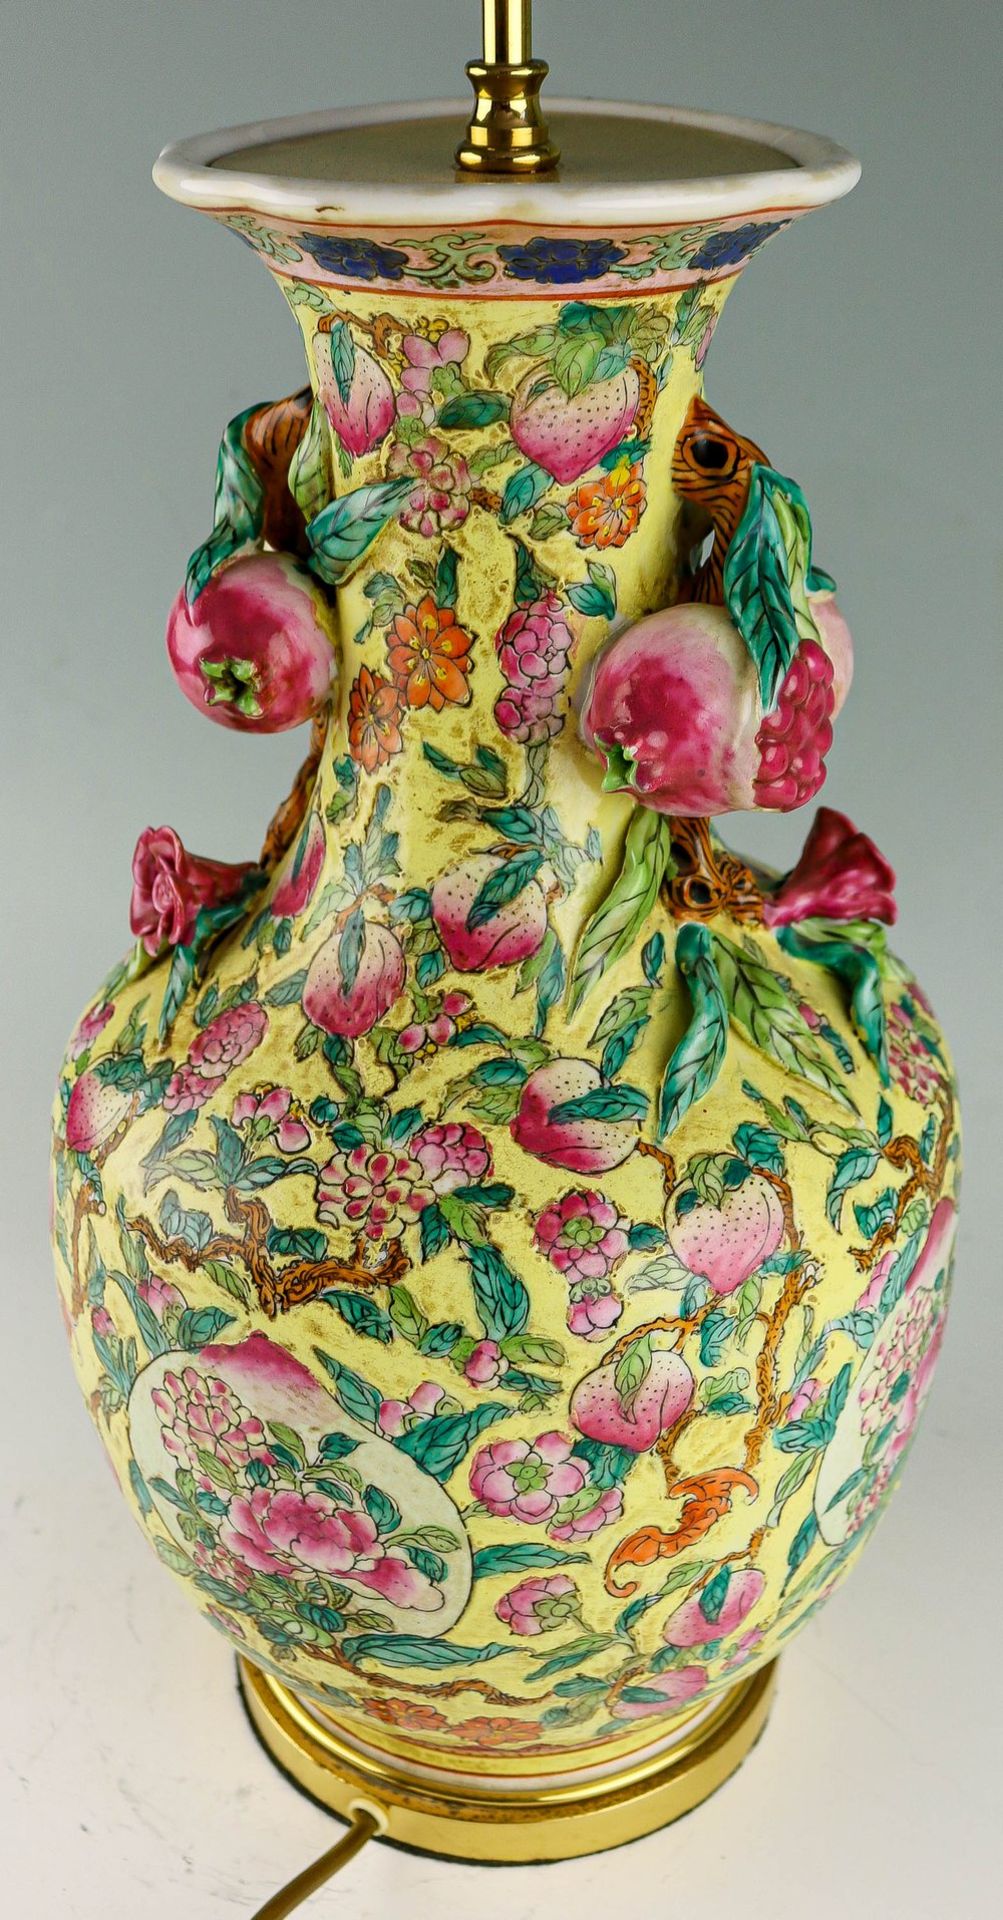 Bauchige Vase, als Lampe montiert China - Image 4 of 4